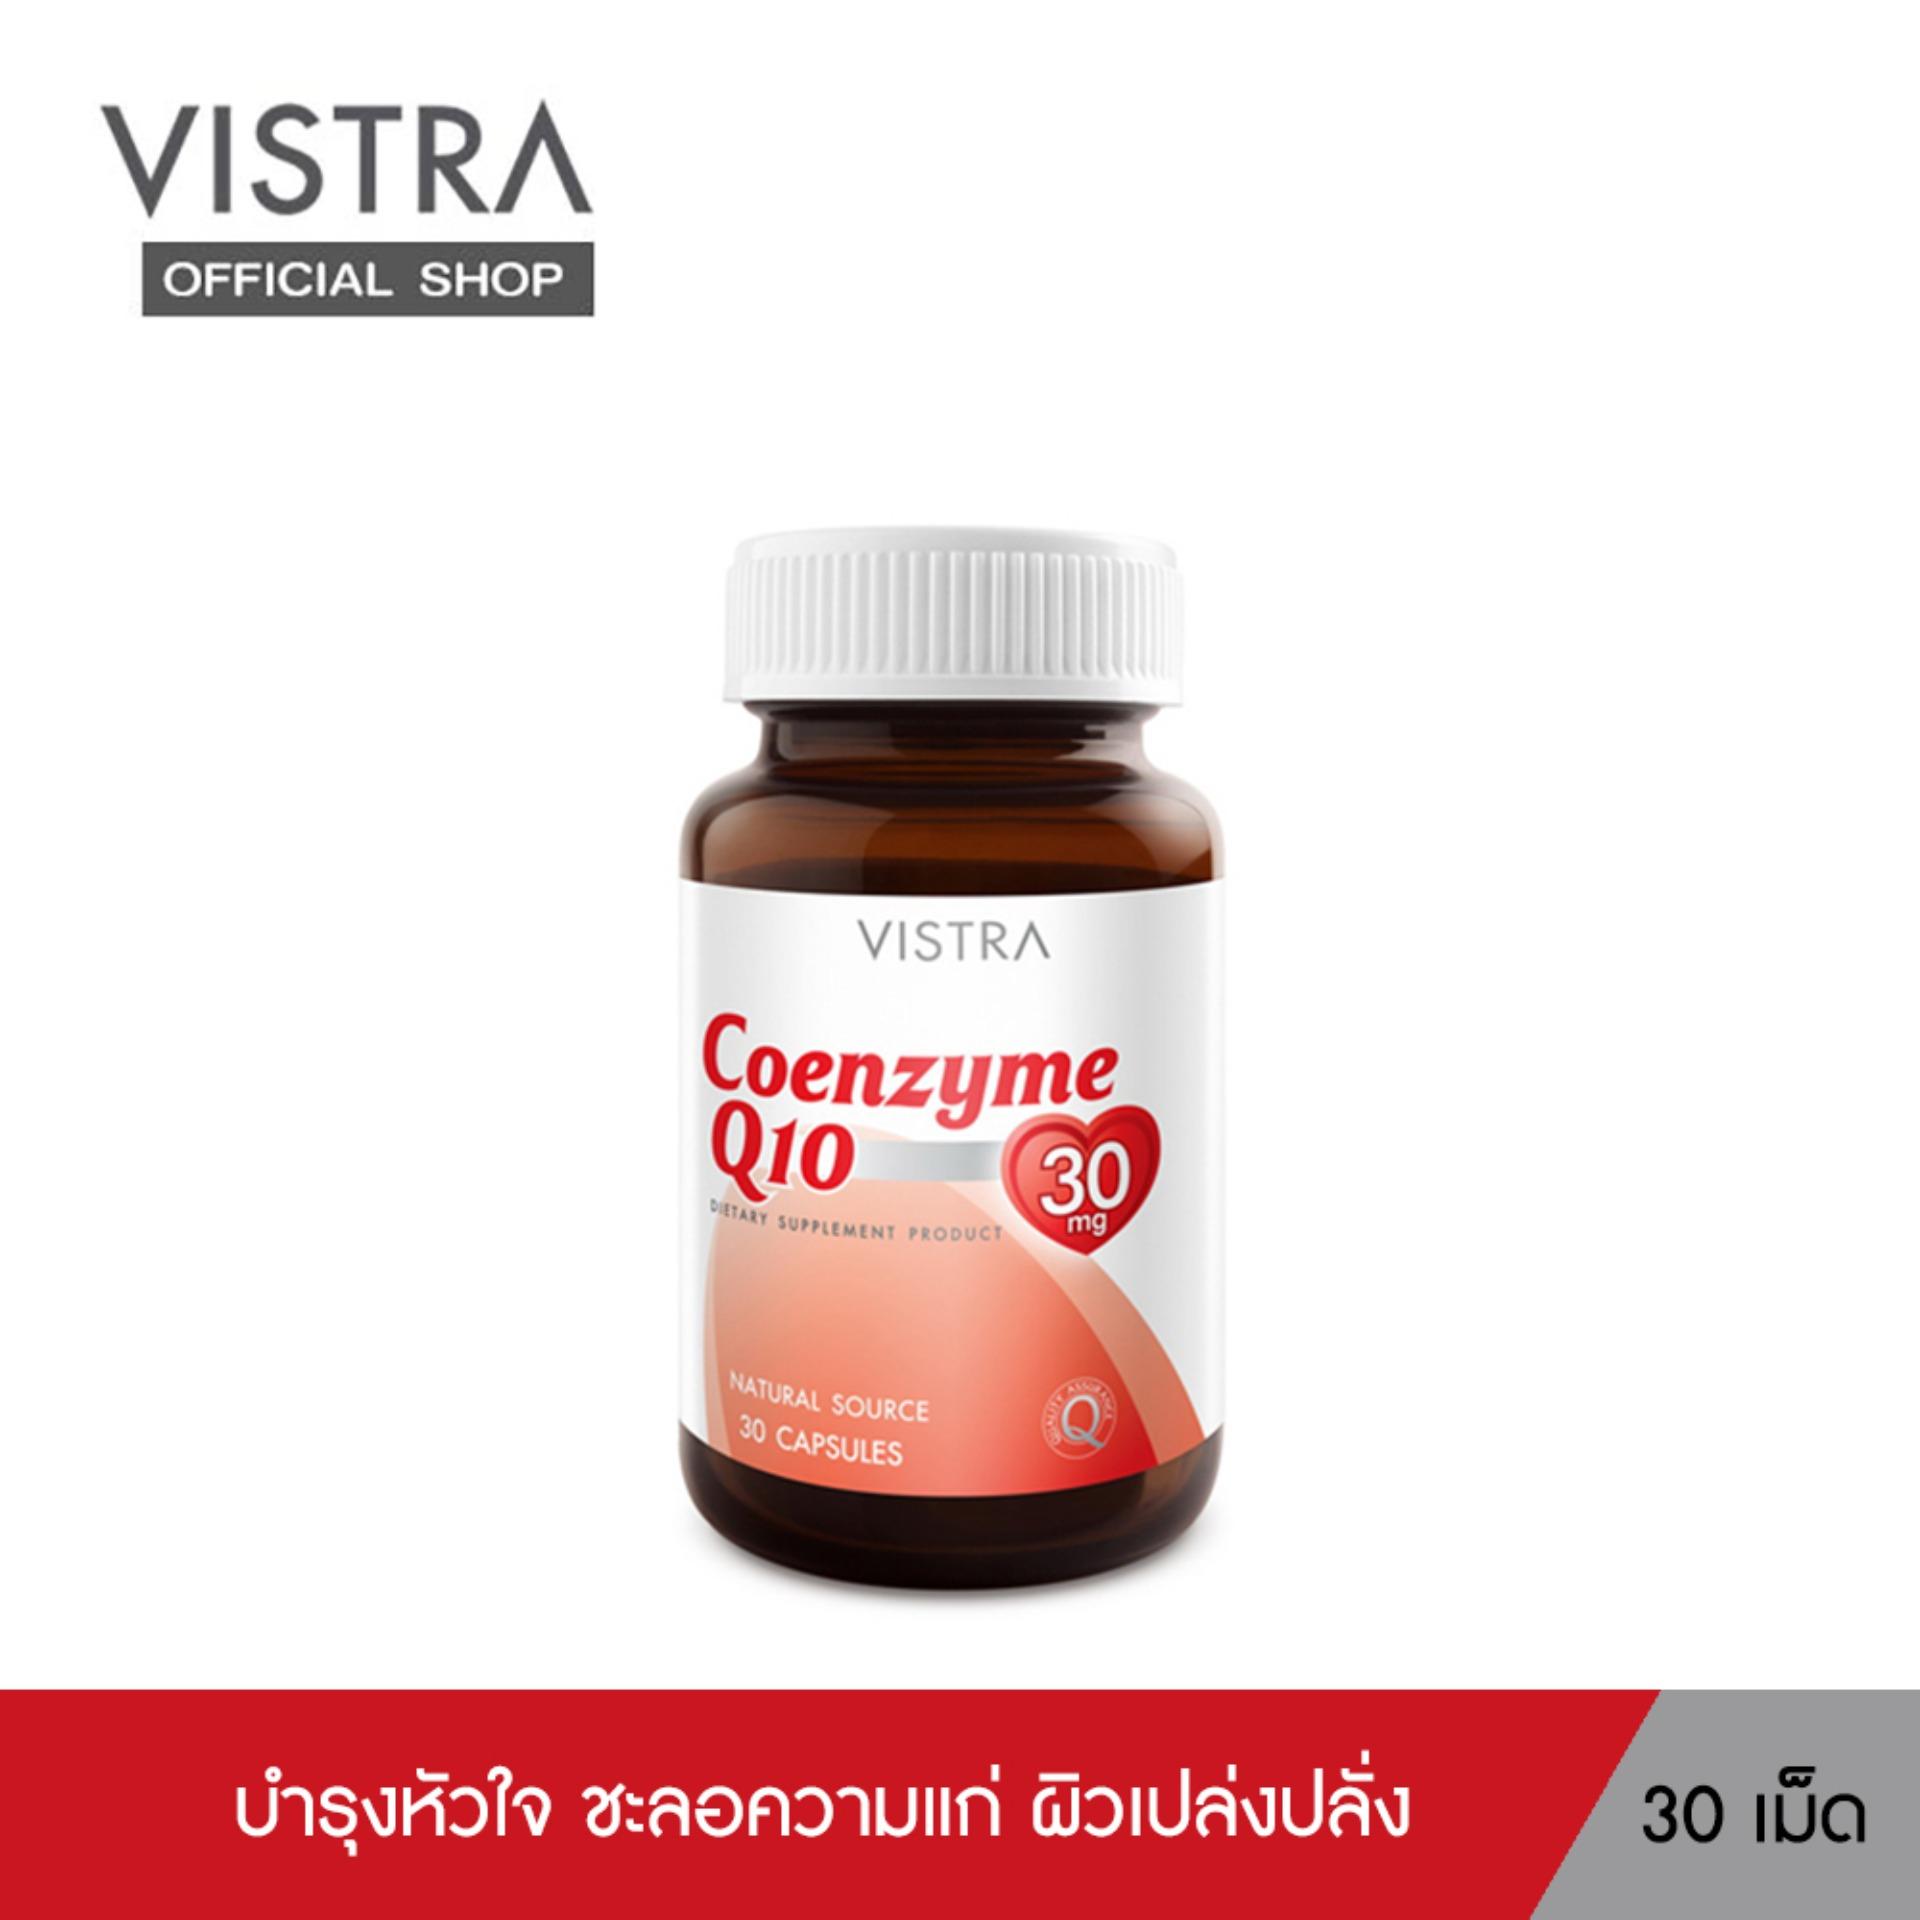 VISTRA Coenzyme Q10 Natural Source (30 Caps) วิสทร้า โคเอ็นไซต์ คิว10 บำรุงหัวใจ